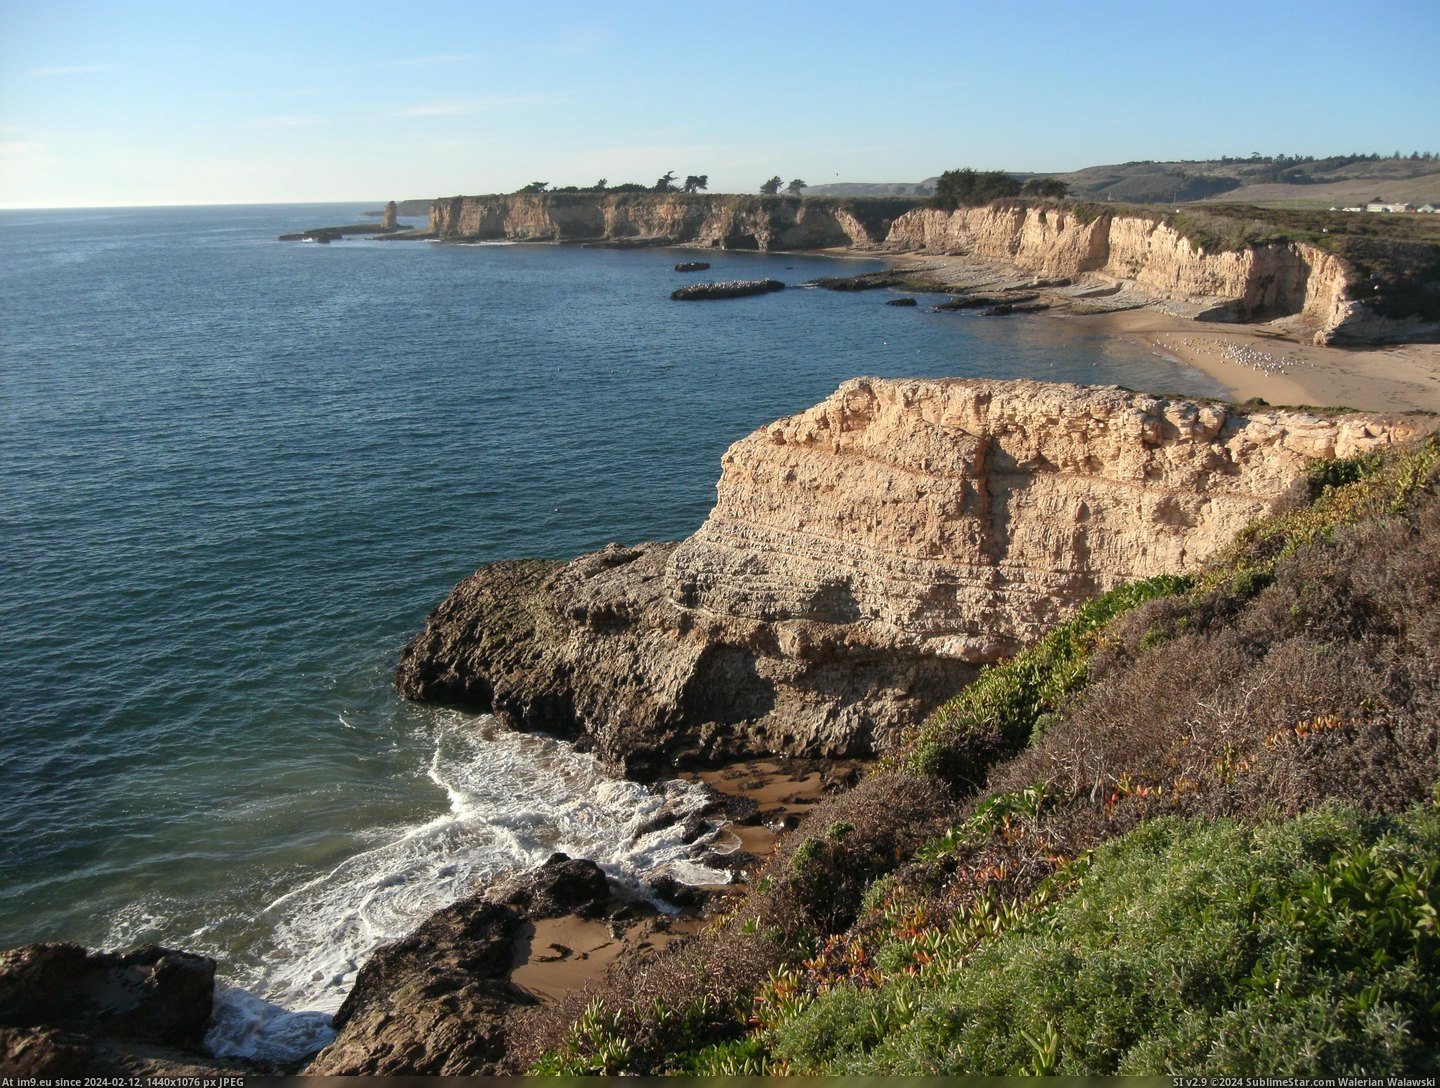 #Small #Picture #Santa #4000x3000 #Cruz #Beach #California [Earthporn] Picture I took of a small beach. Santa Cruz, California [4000x3000] Pic. (Изображение из альбом My r/EARTHPORN favs))